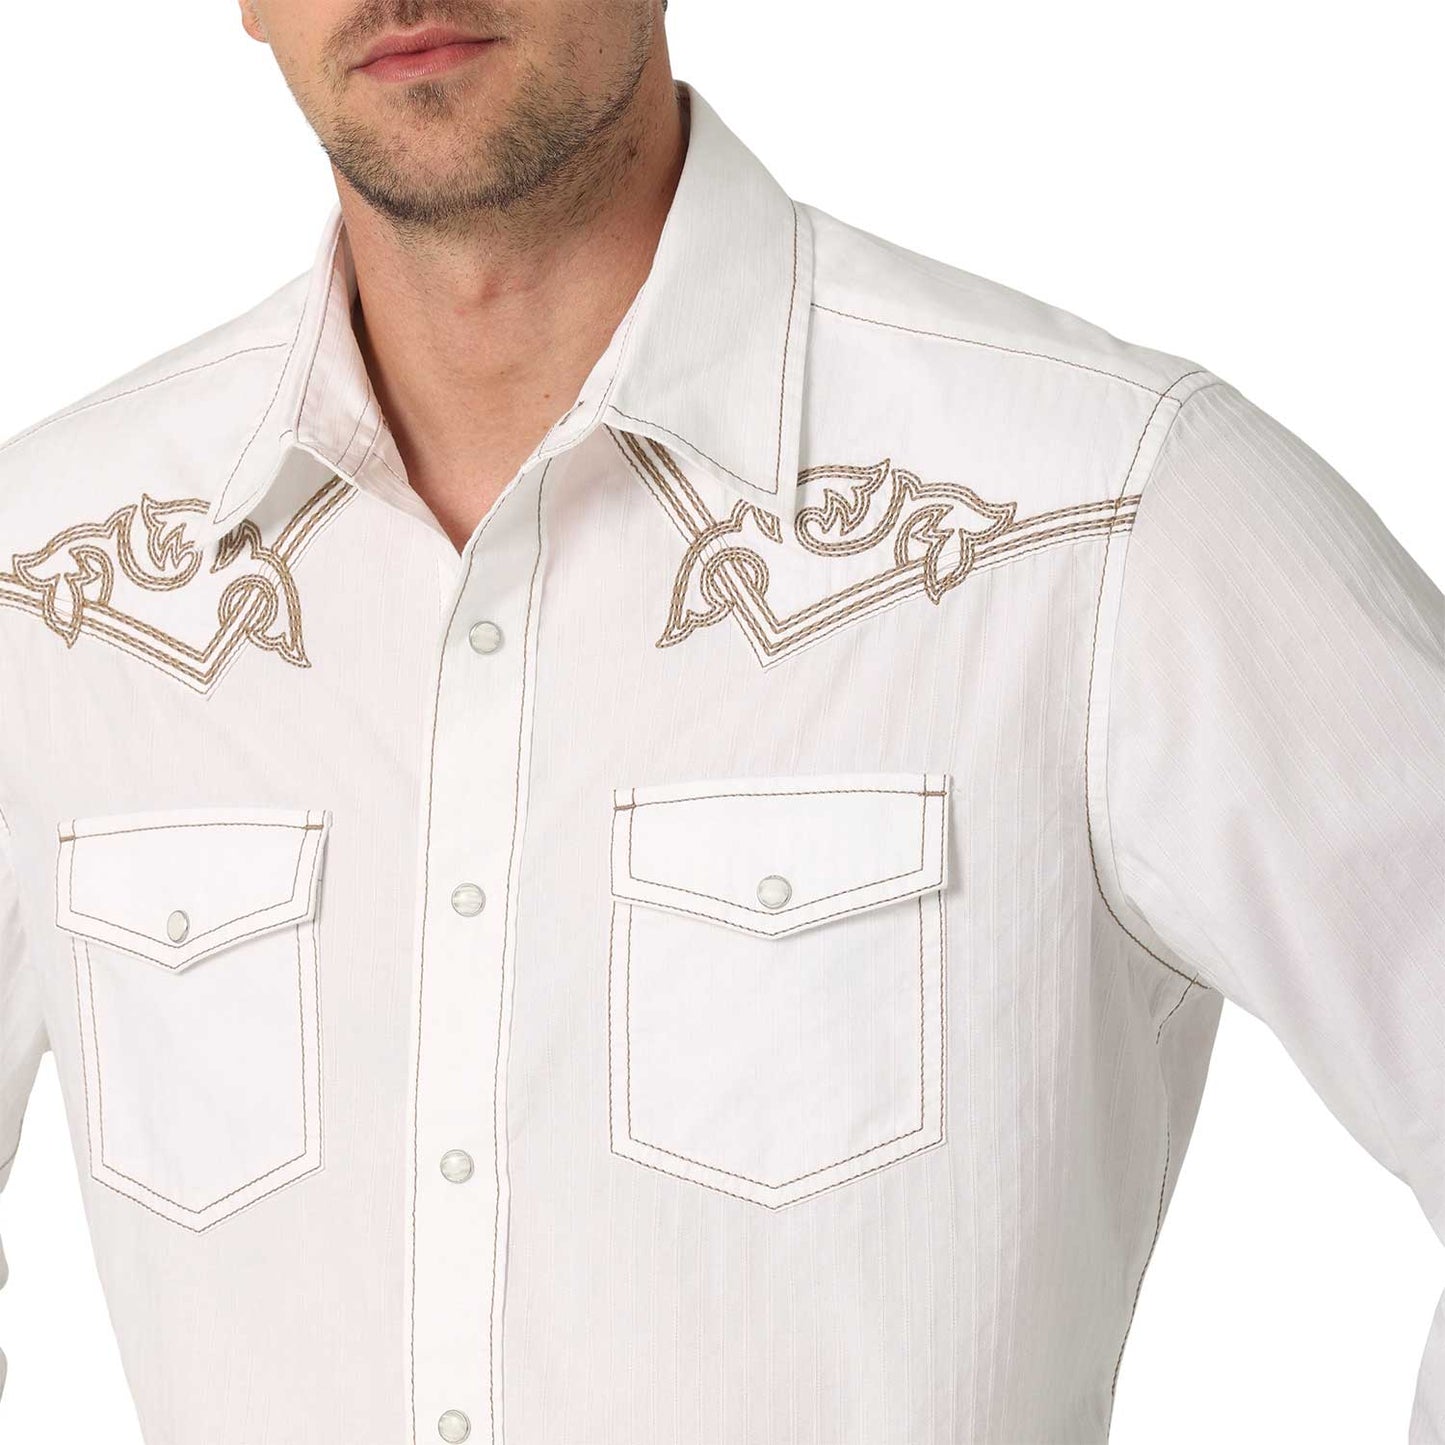 Top Men's (112326338) - Wrangler® Rock 47® Embriodered Long Sleeve Shirt - Modern Fit - White